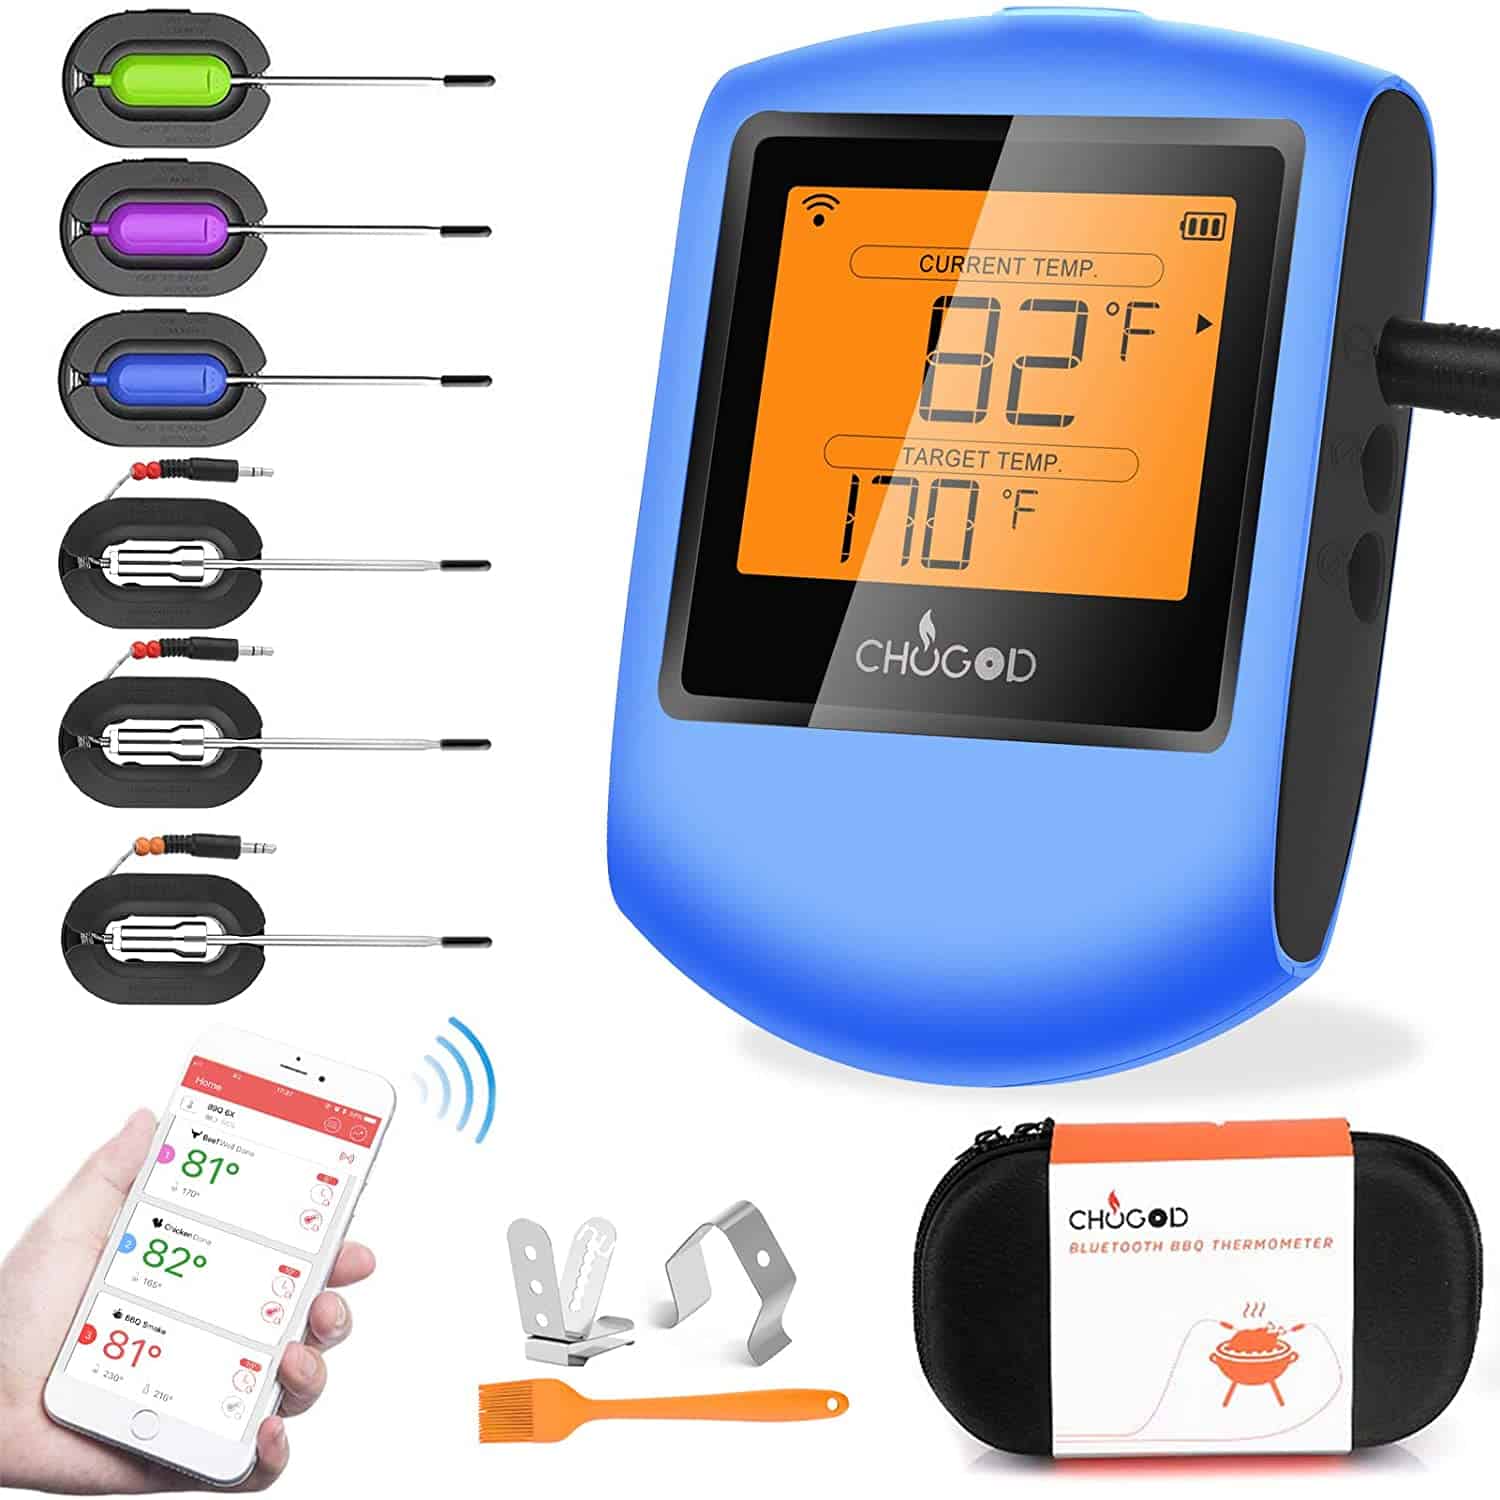 Best 6 probe Bluetooth BBQ thermometer- Chugod